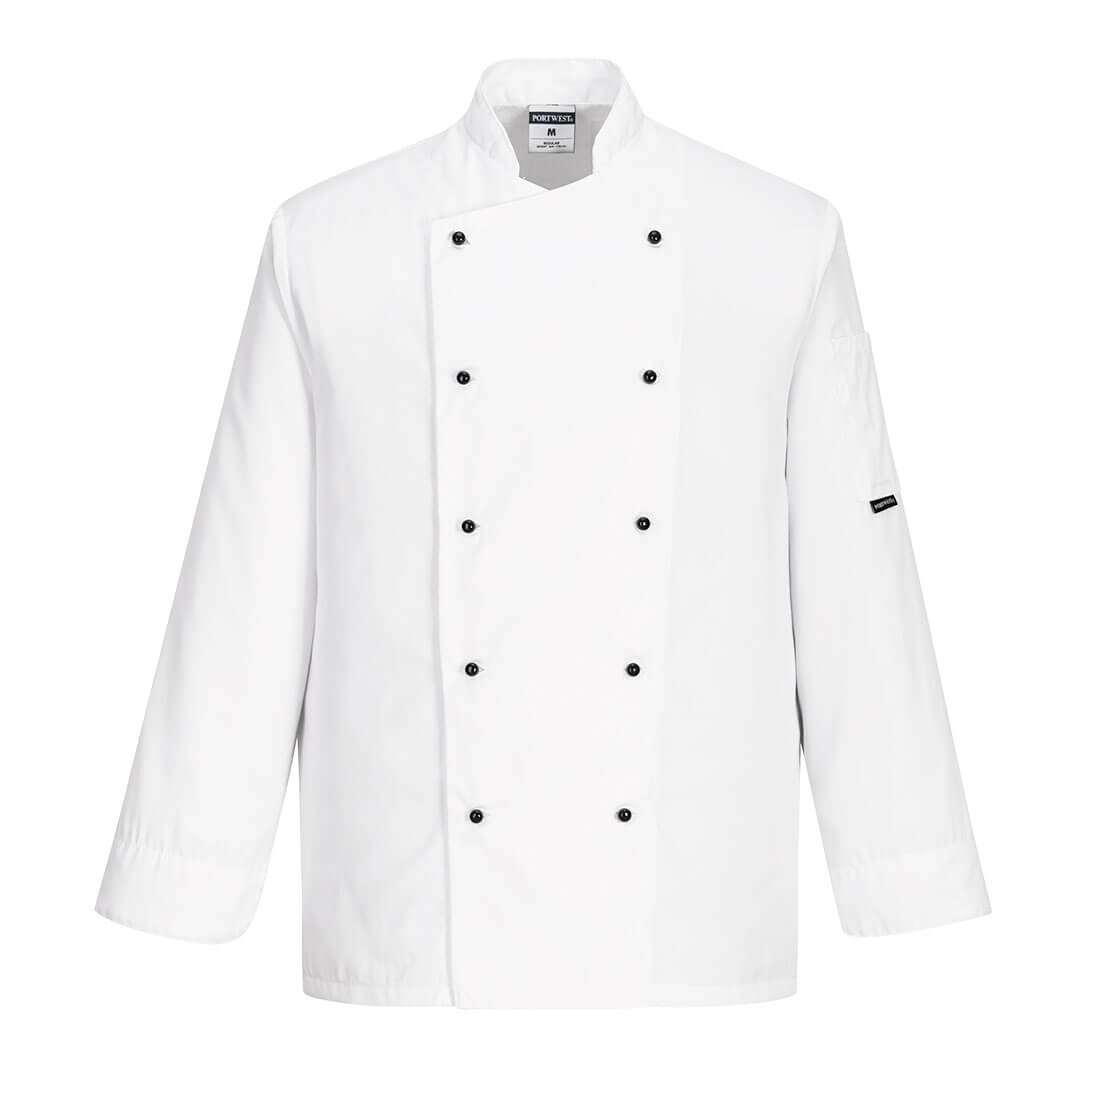 Somerset Chefs Jacket L/S - White